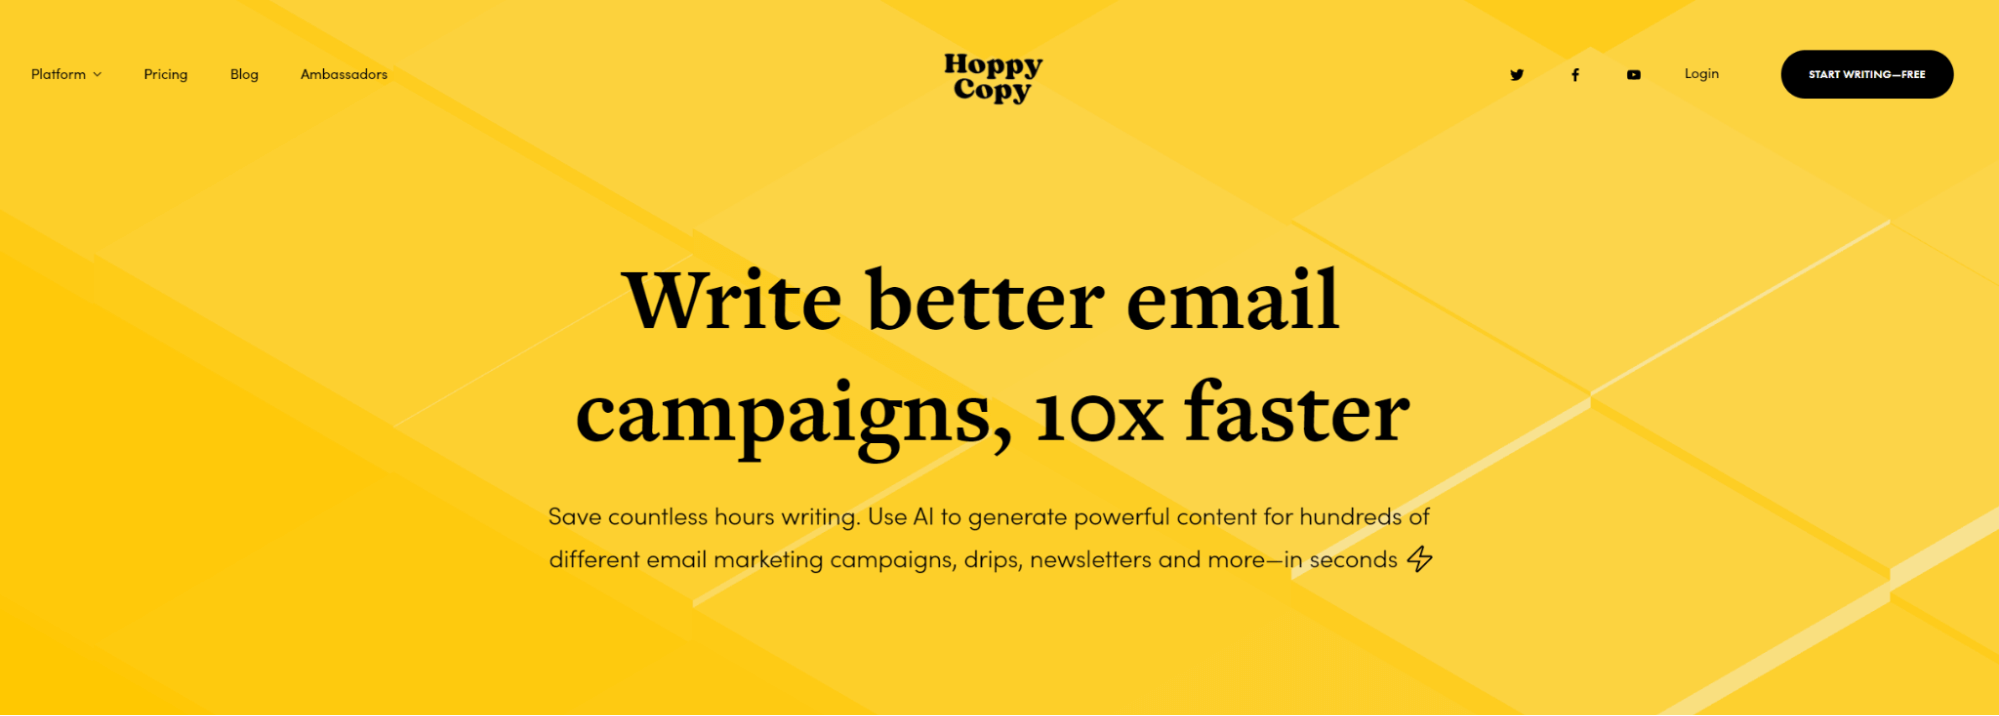 HoppyCopy email copywriting platform